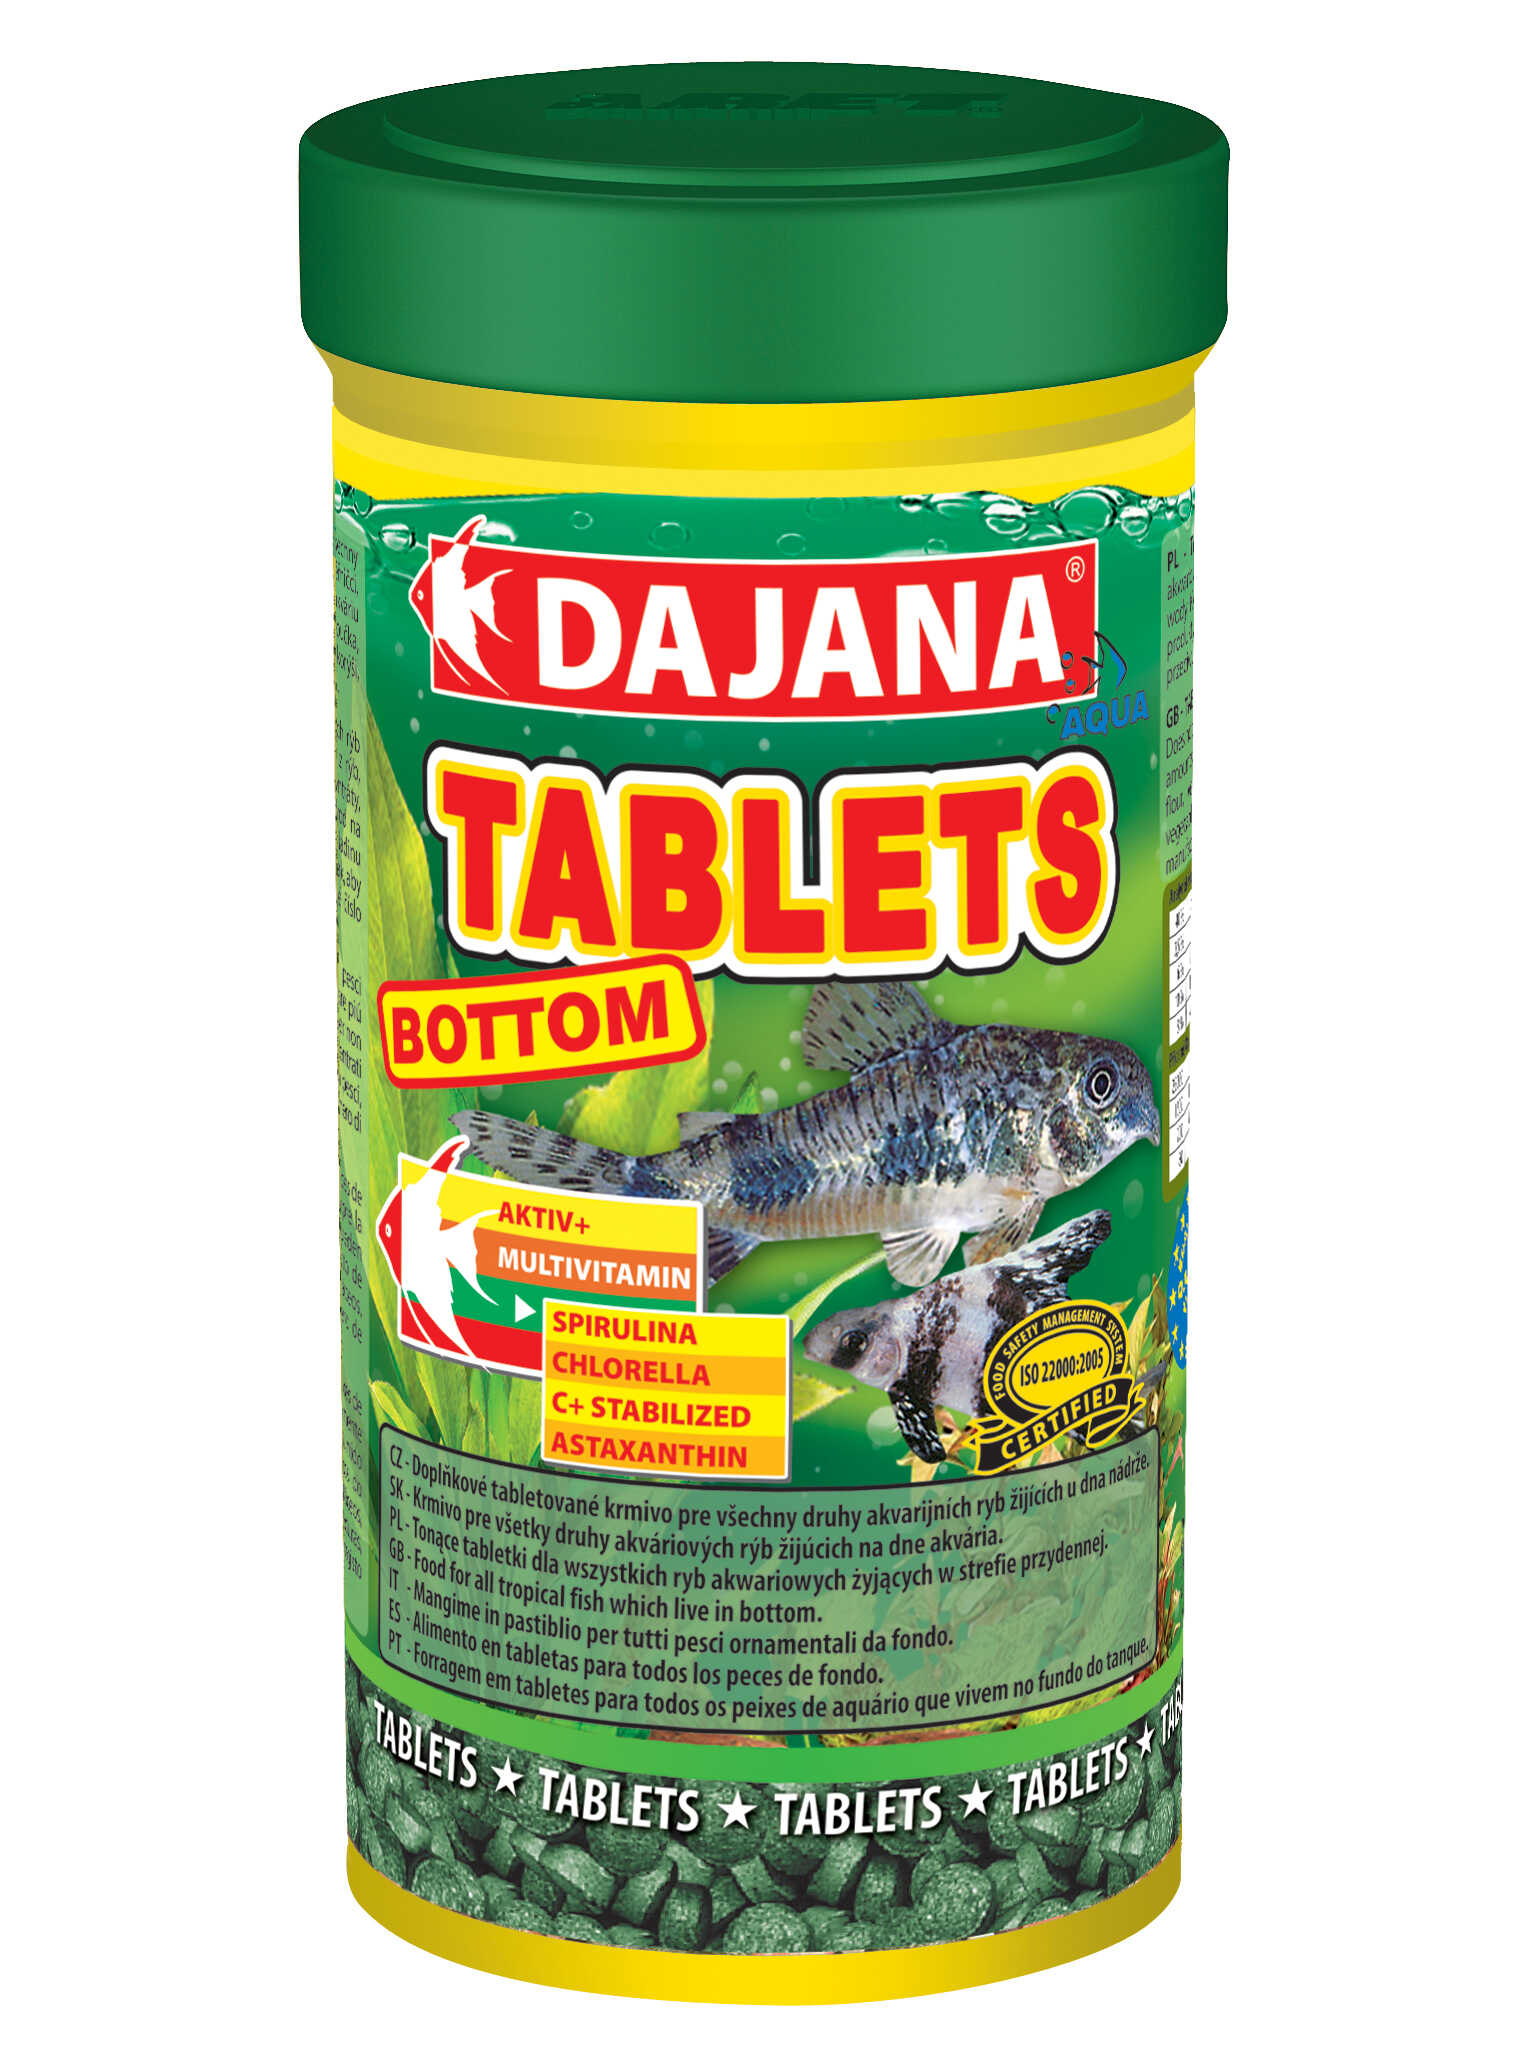 Dajana 100 ml bottom tablets